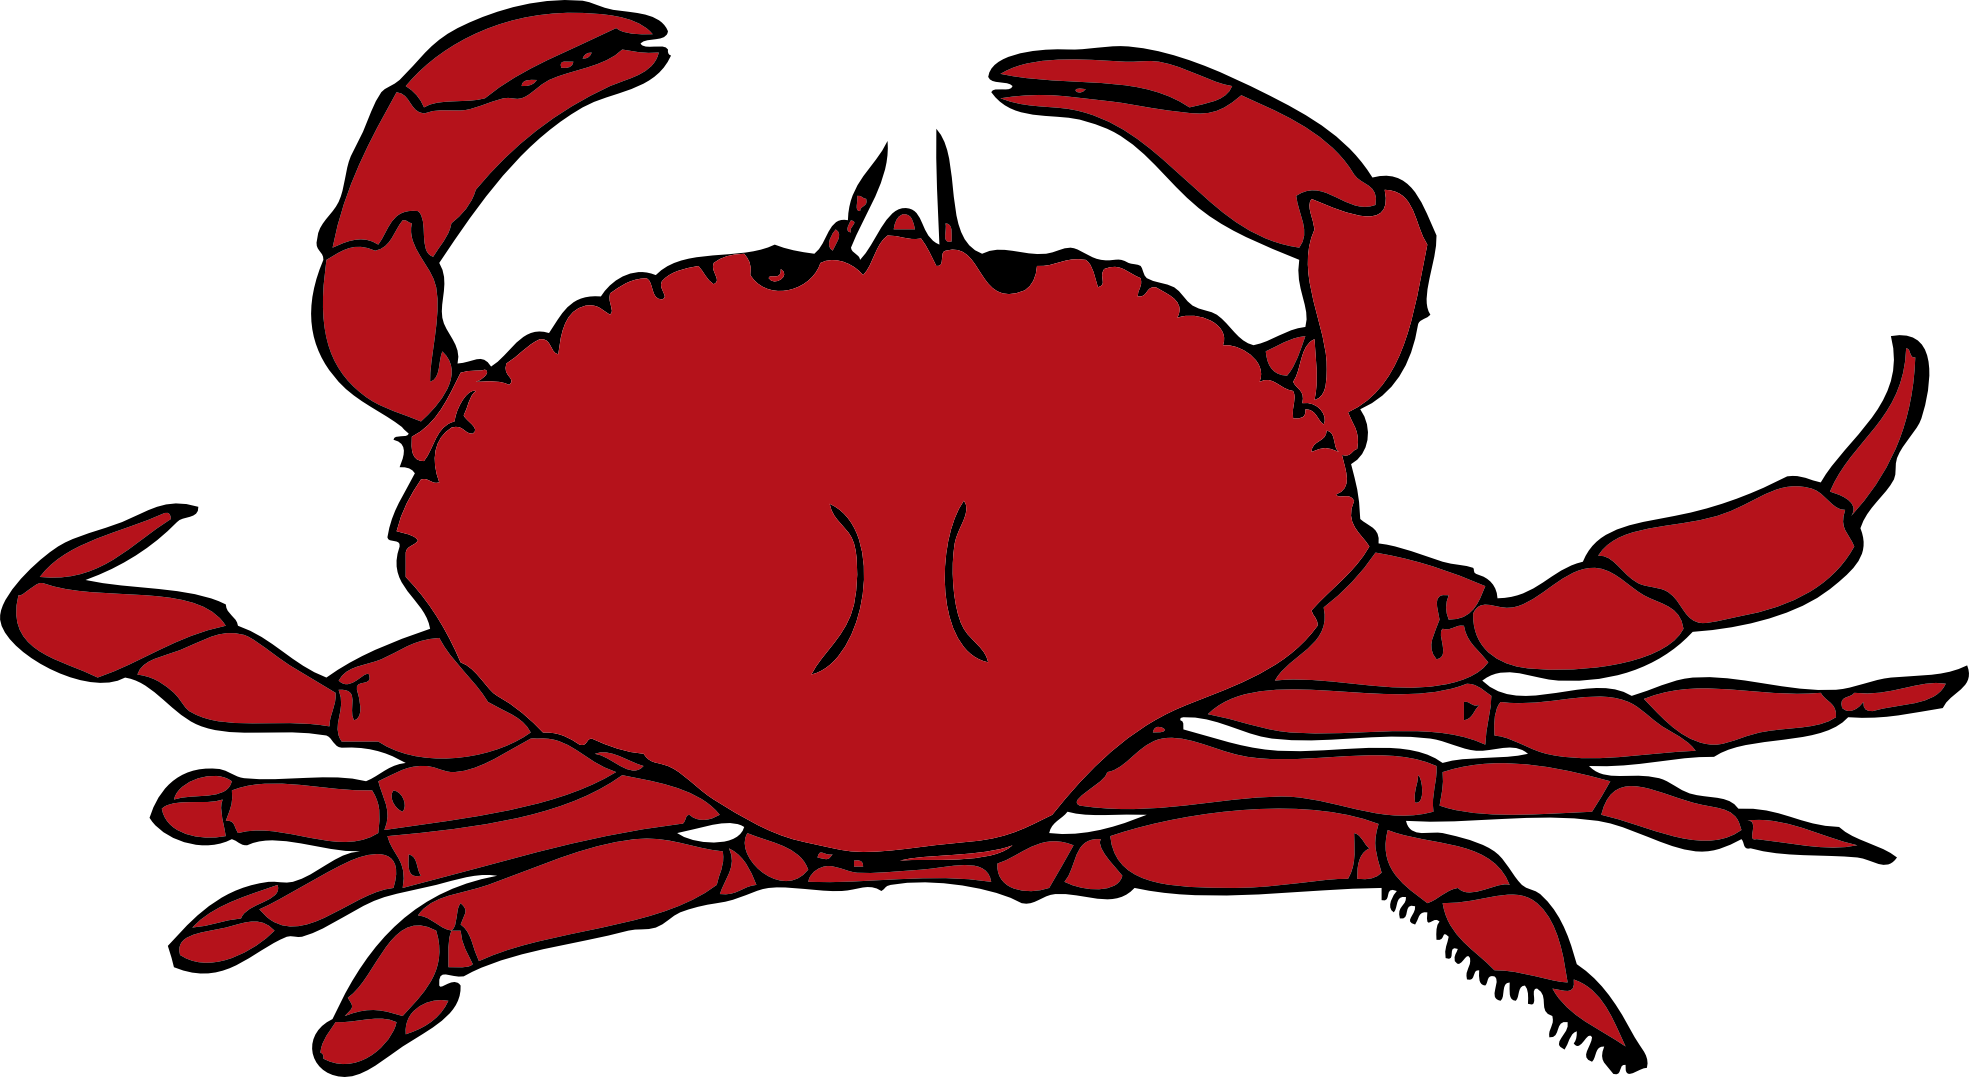 Top View Of A Crab Clip Art - ClipArt Best